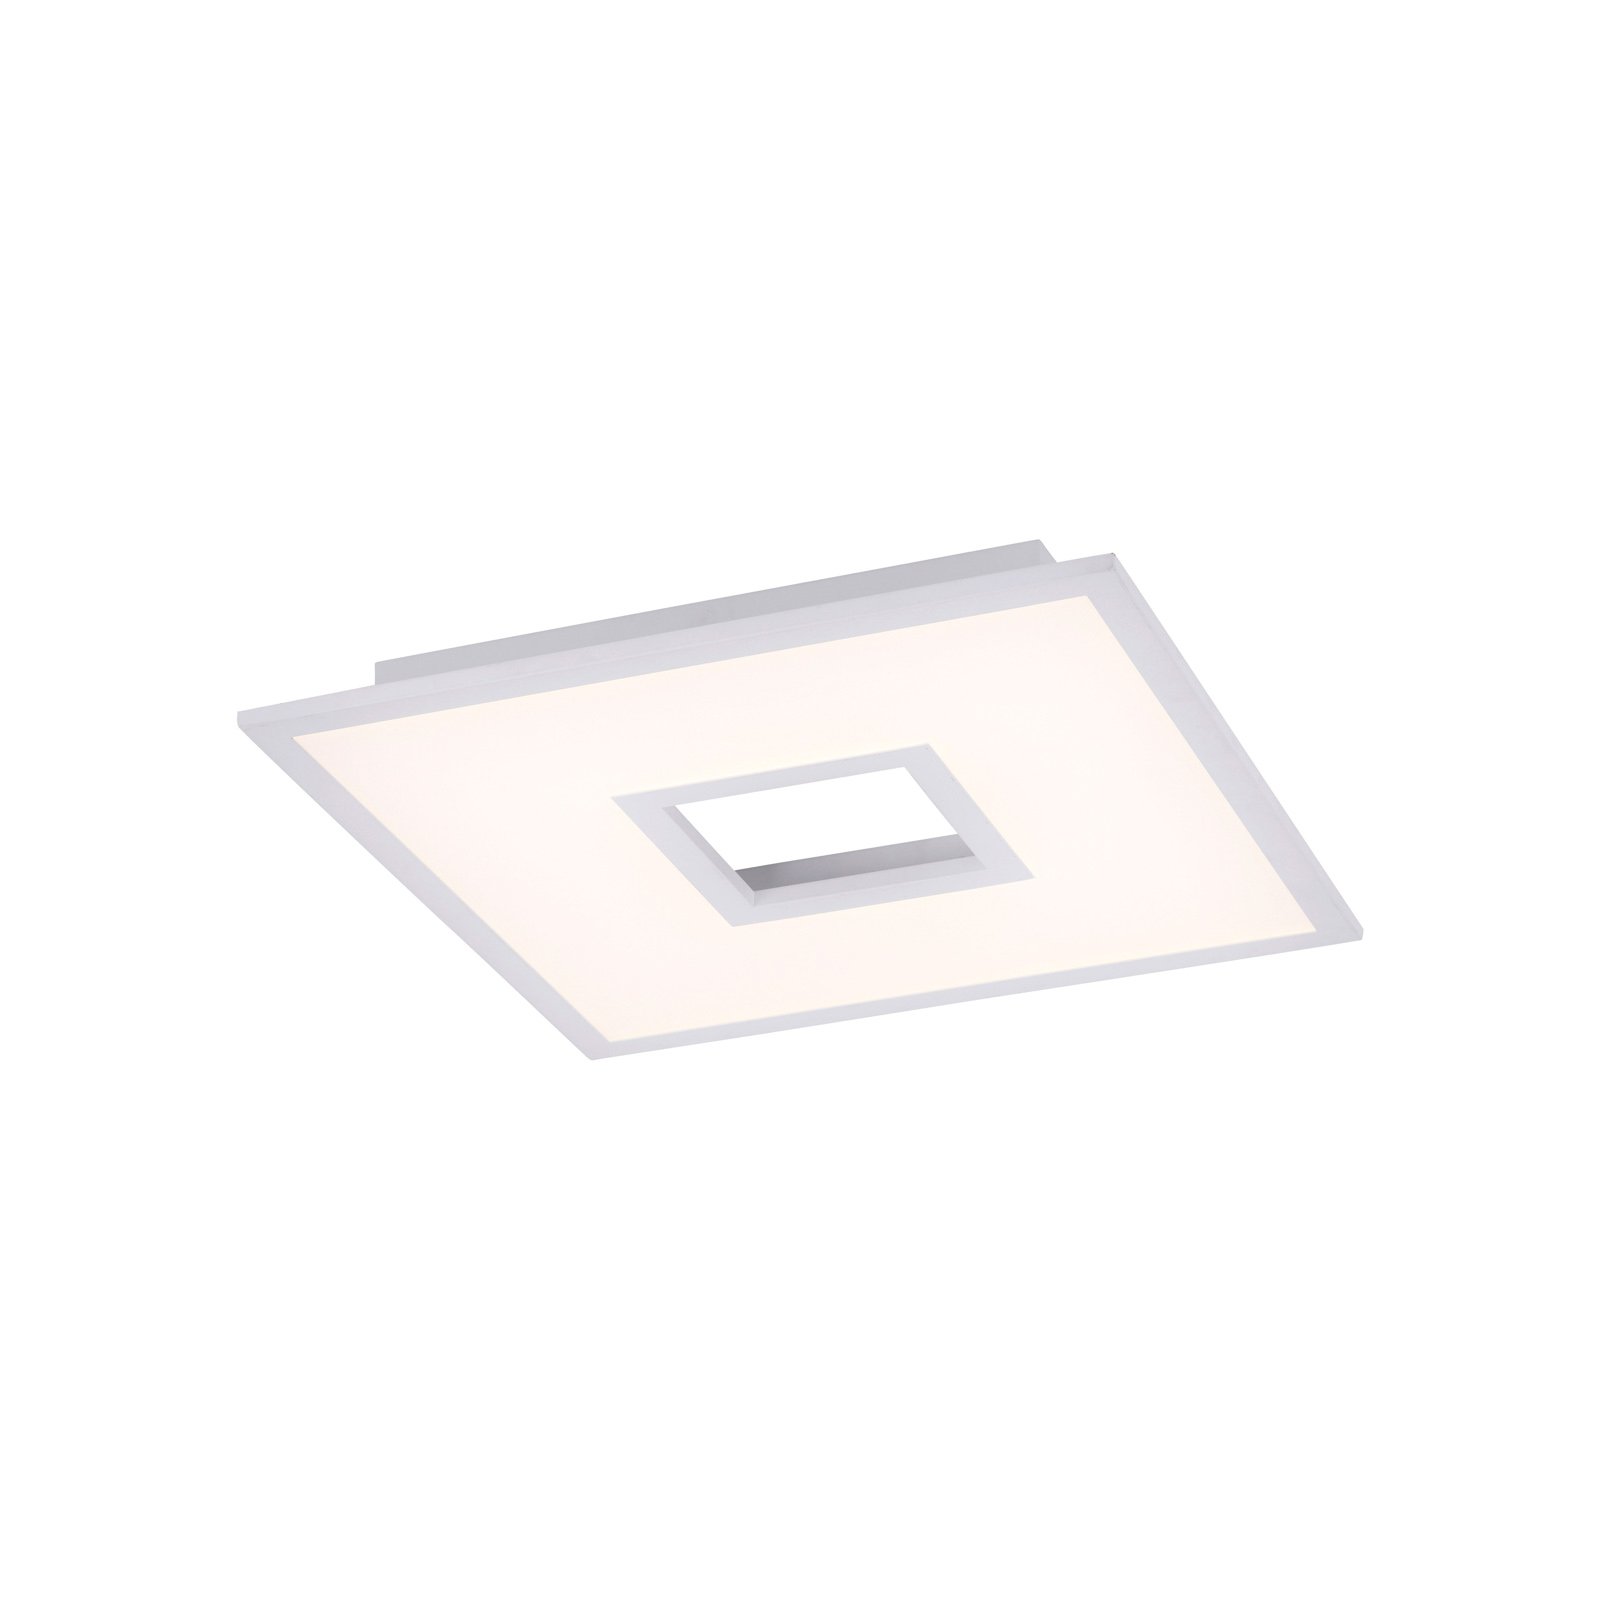 LED plafondlamp Recess met afstandsbediening RGBW